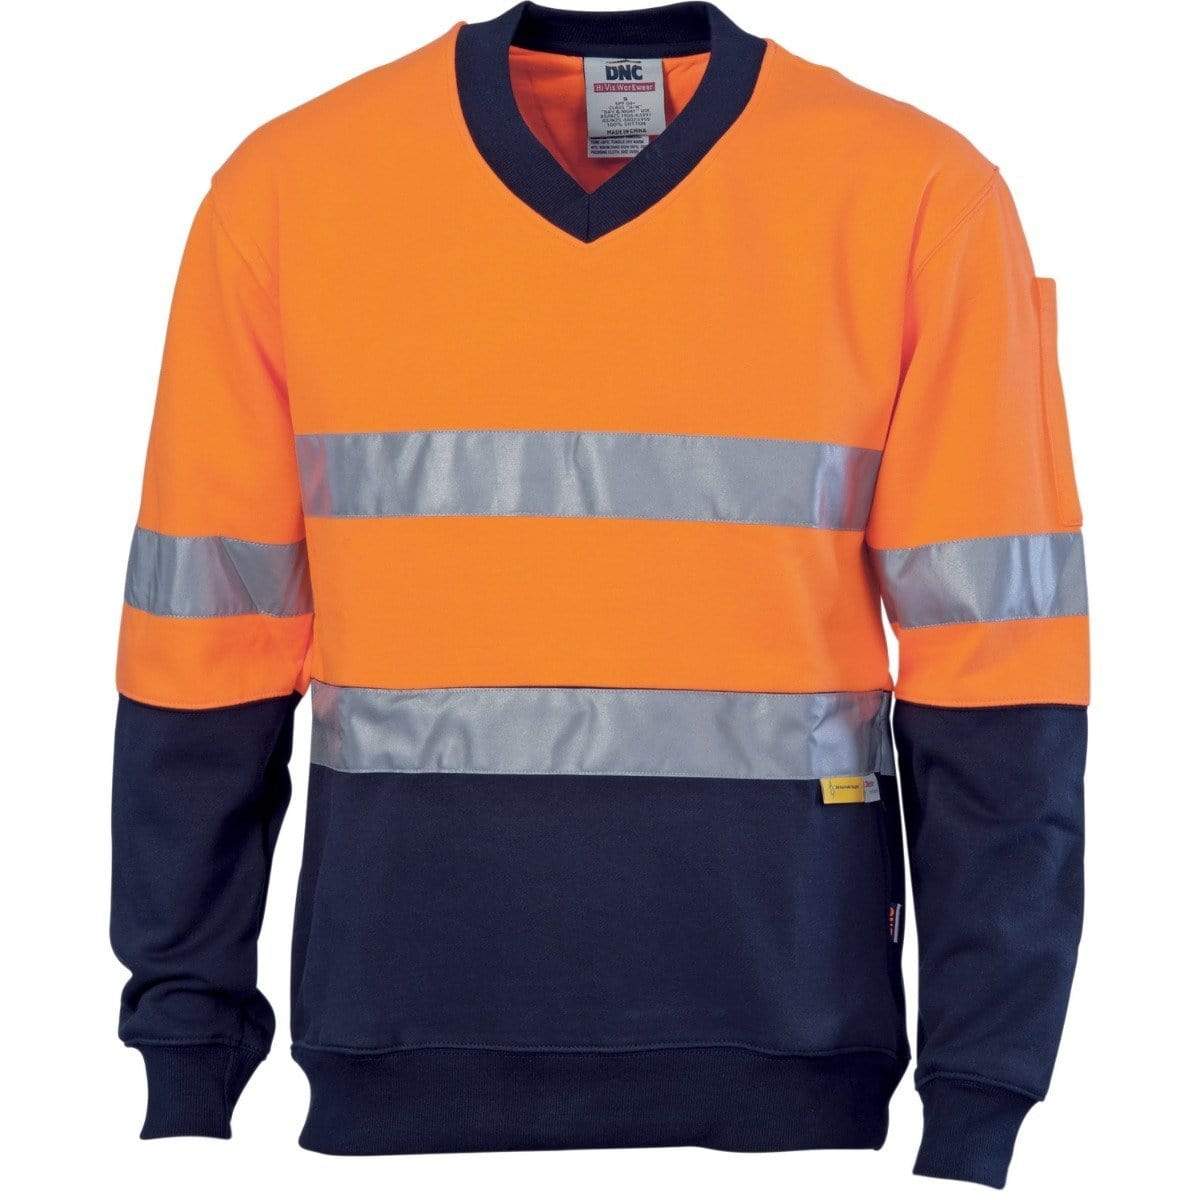 DNC Workwear Work Wear DNC WORKWEAR Hi-Vis Two-Tone Cotton Fleecy V-Neck Sweatshirt with 3M R/Tape 3924